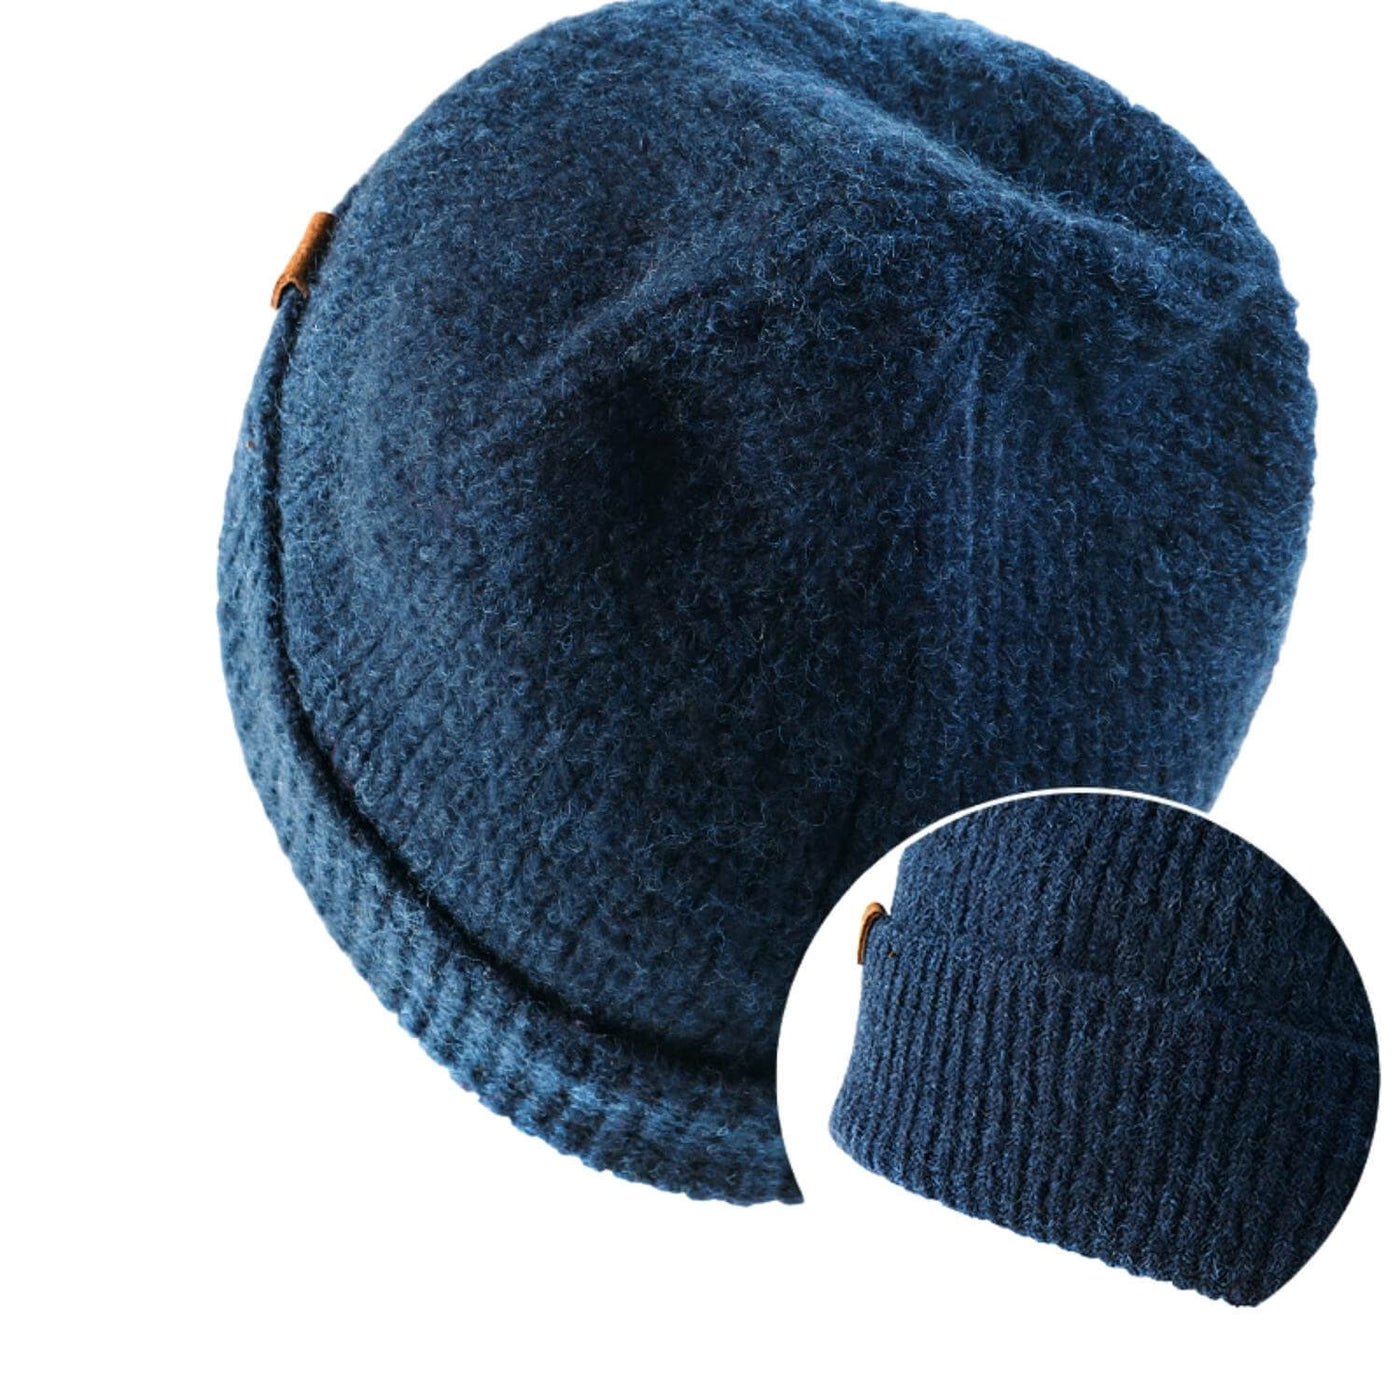 Wool knit toque